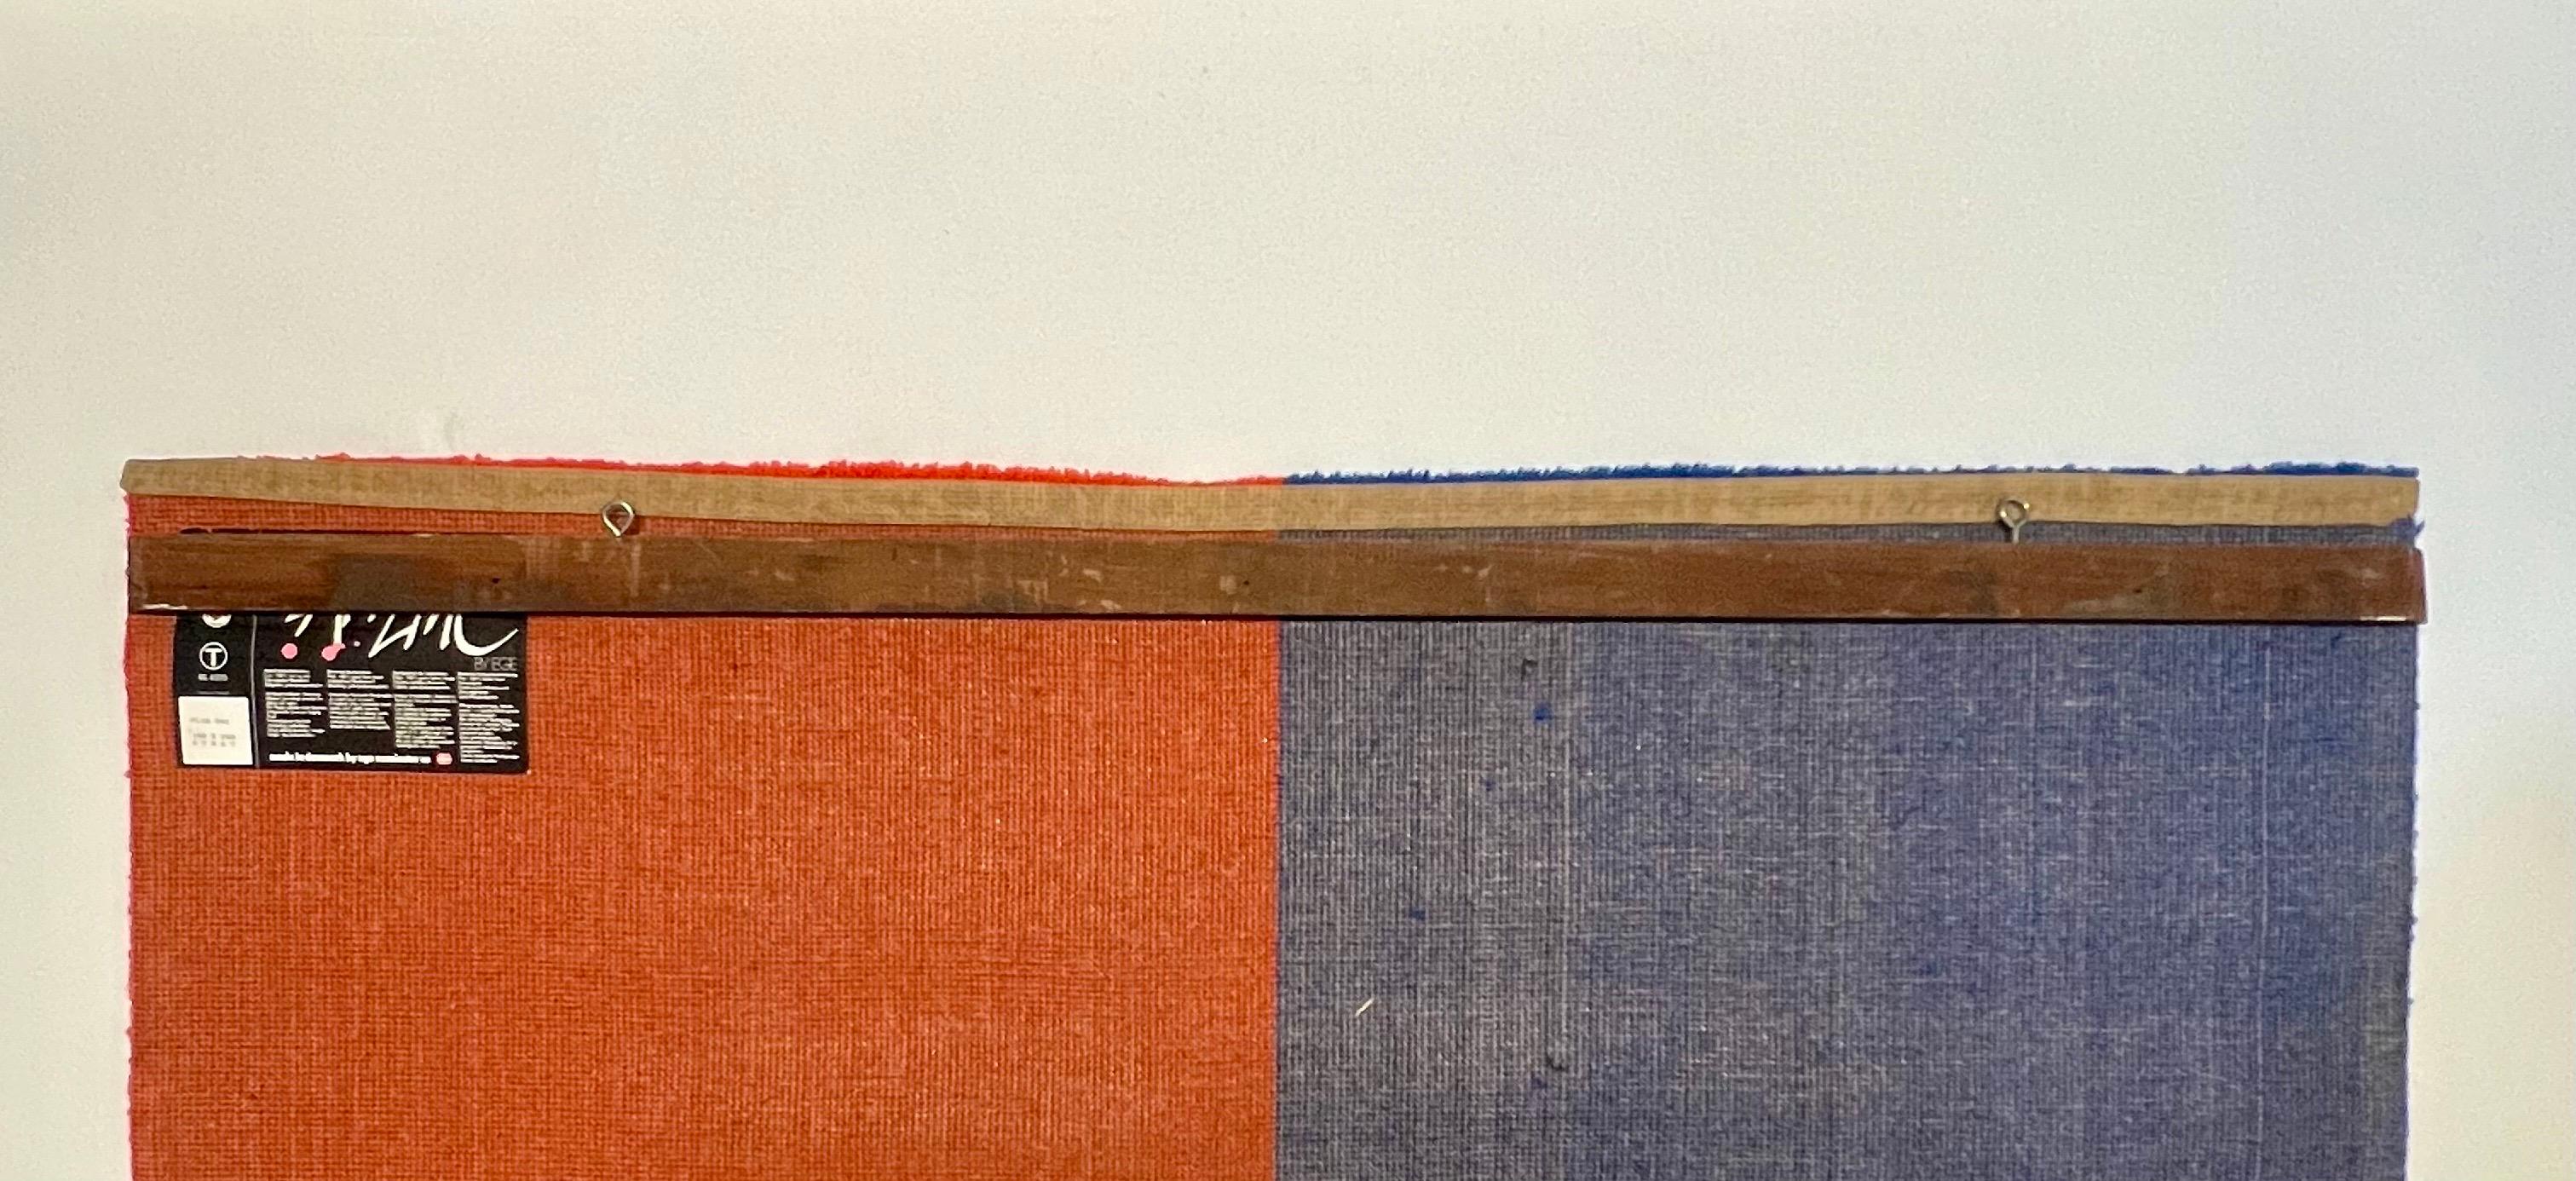 Wool Vintage Modernist Art Line Wall Rug by Ege Axminster c1960s For Sale